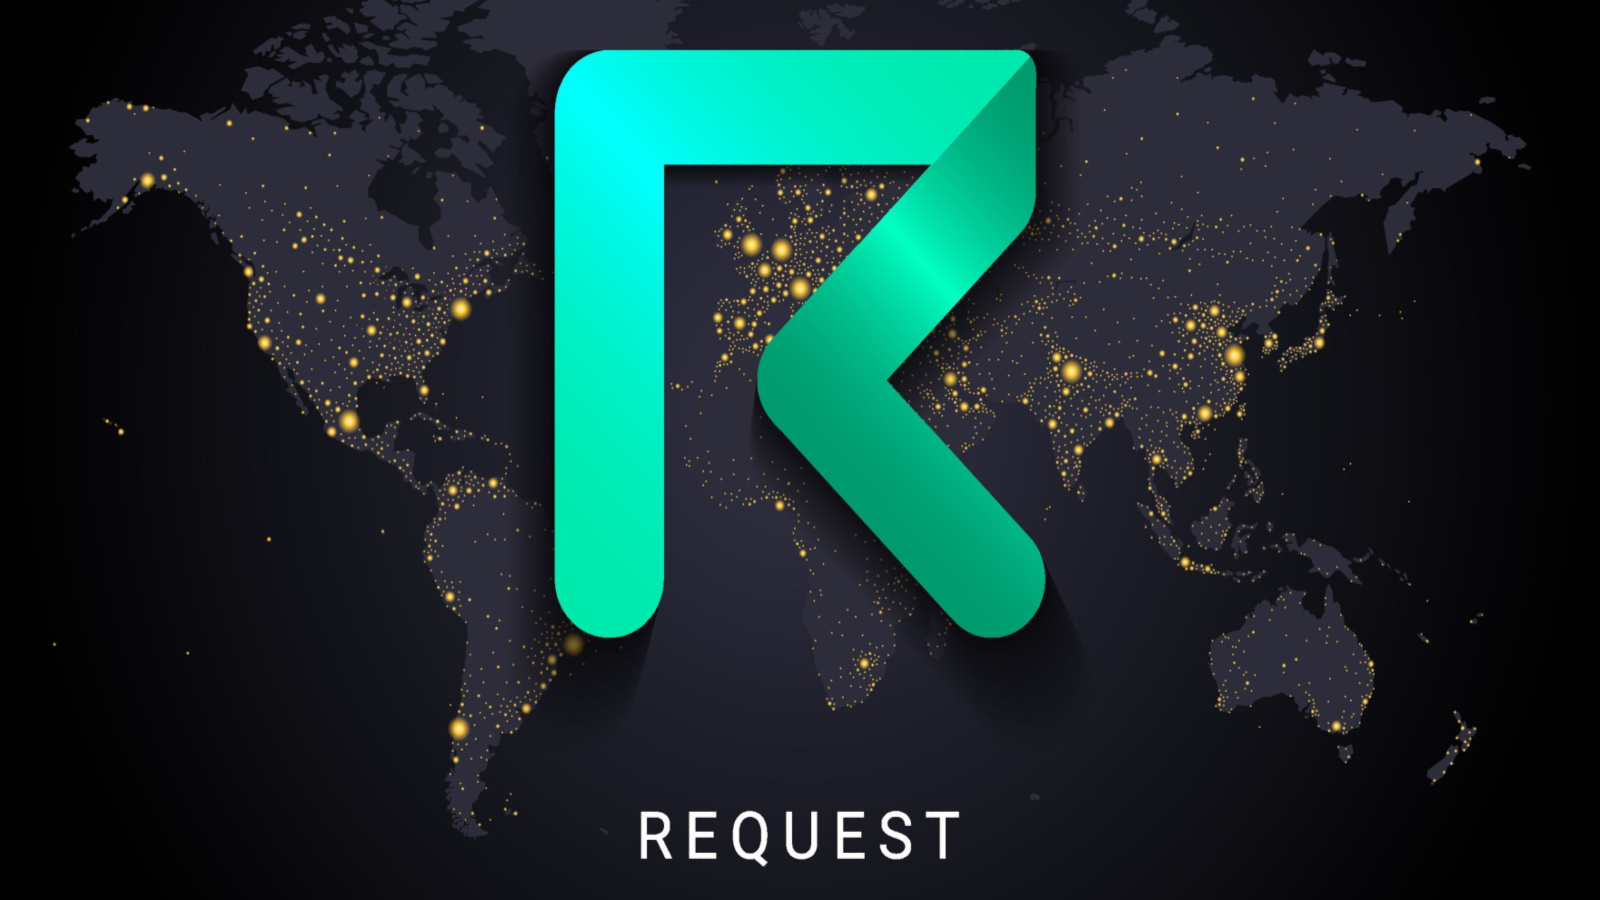 The Request (REQ) crypto logo over the world representing Request Price Predictions.